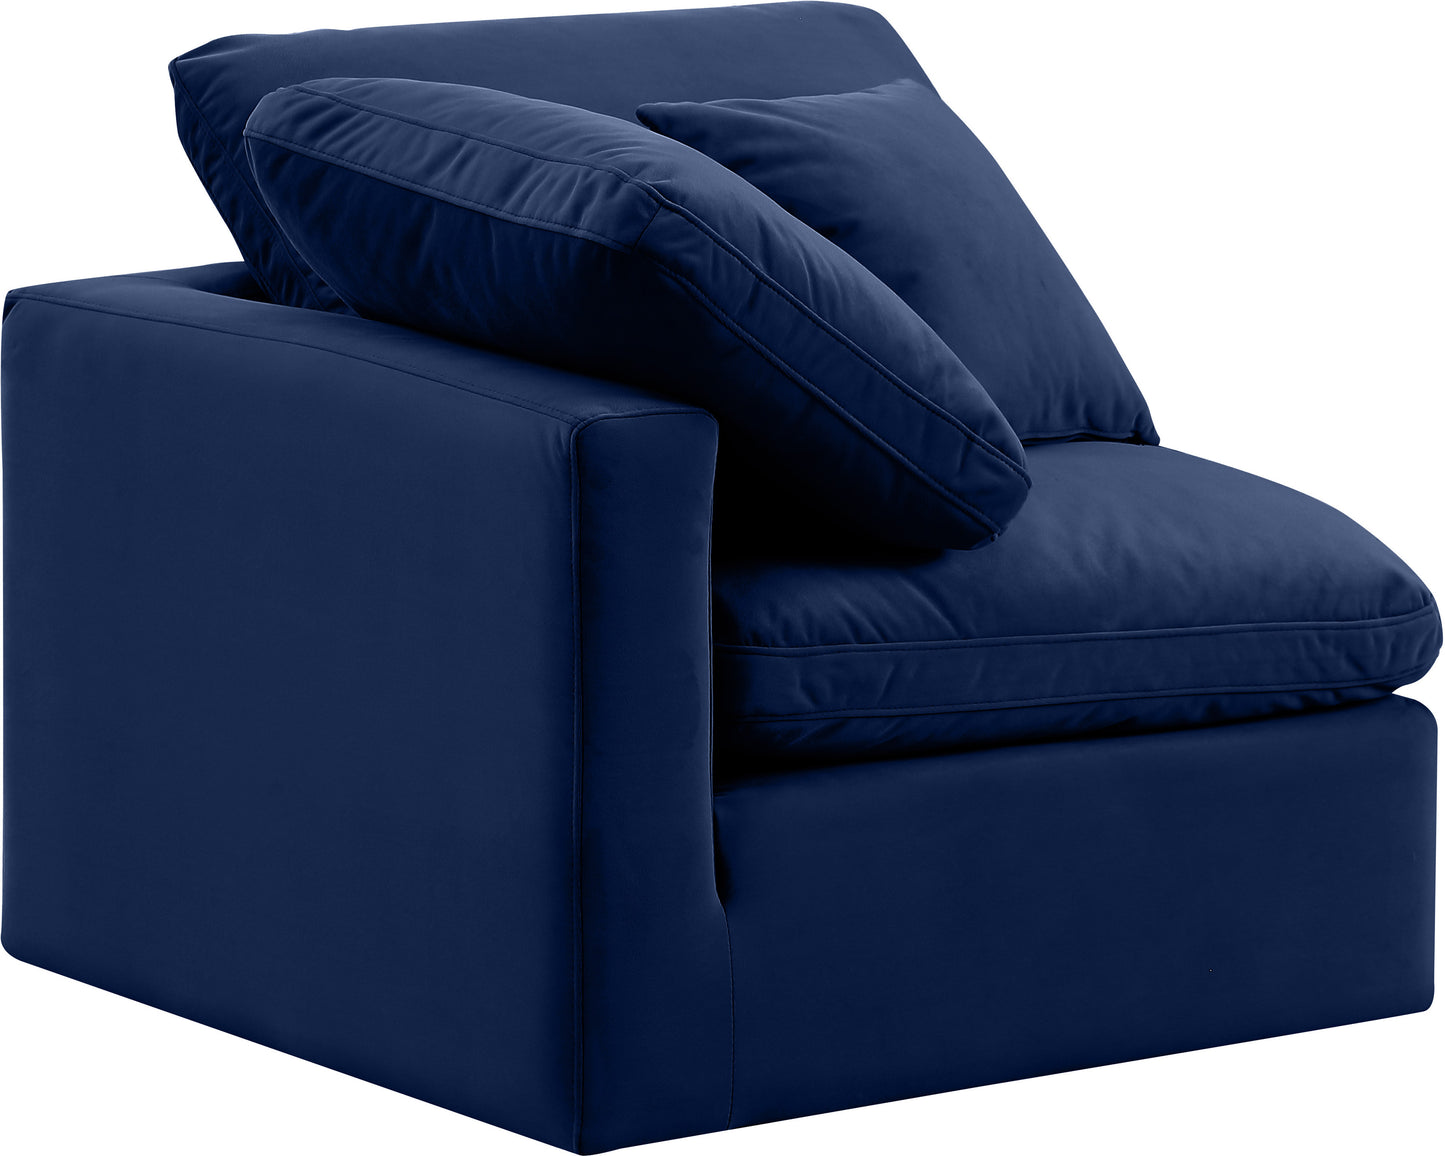 luxus navy velvet corner chair corner